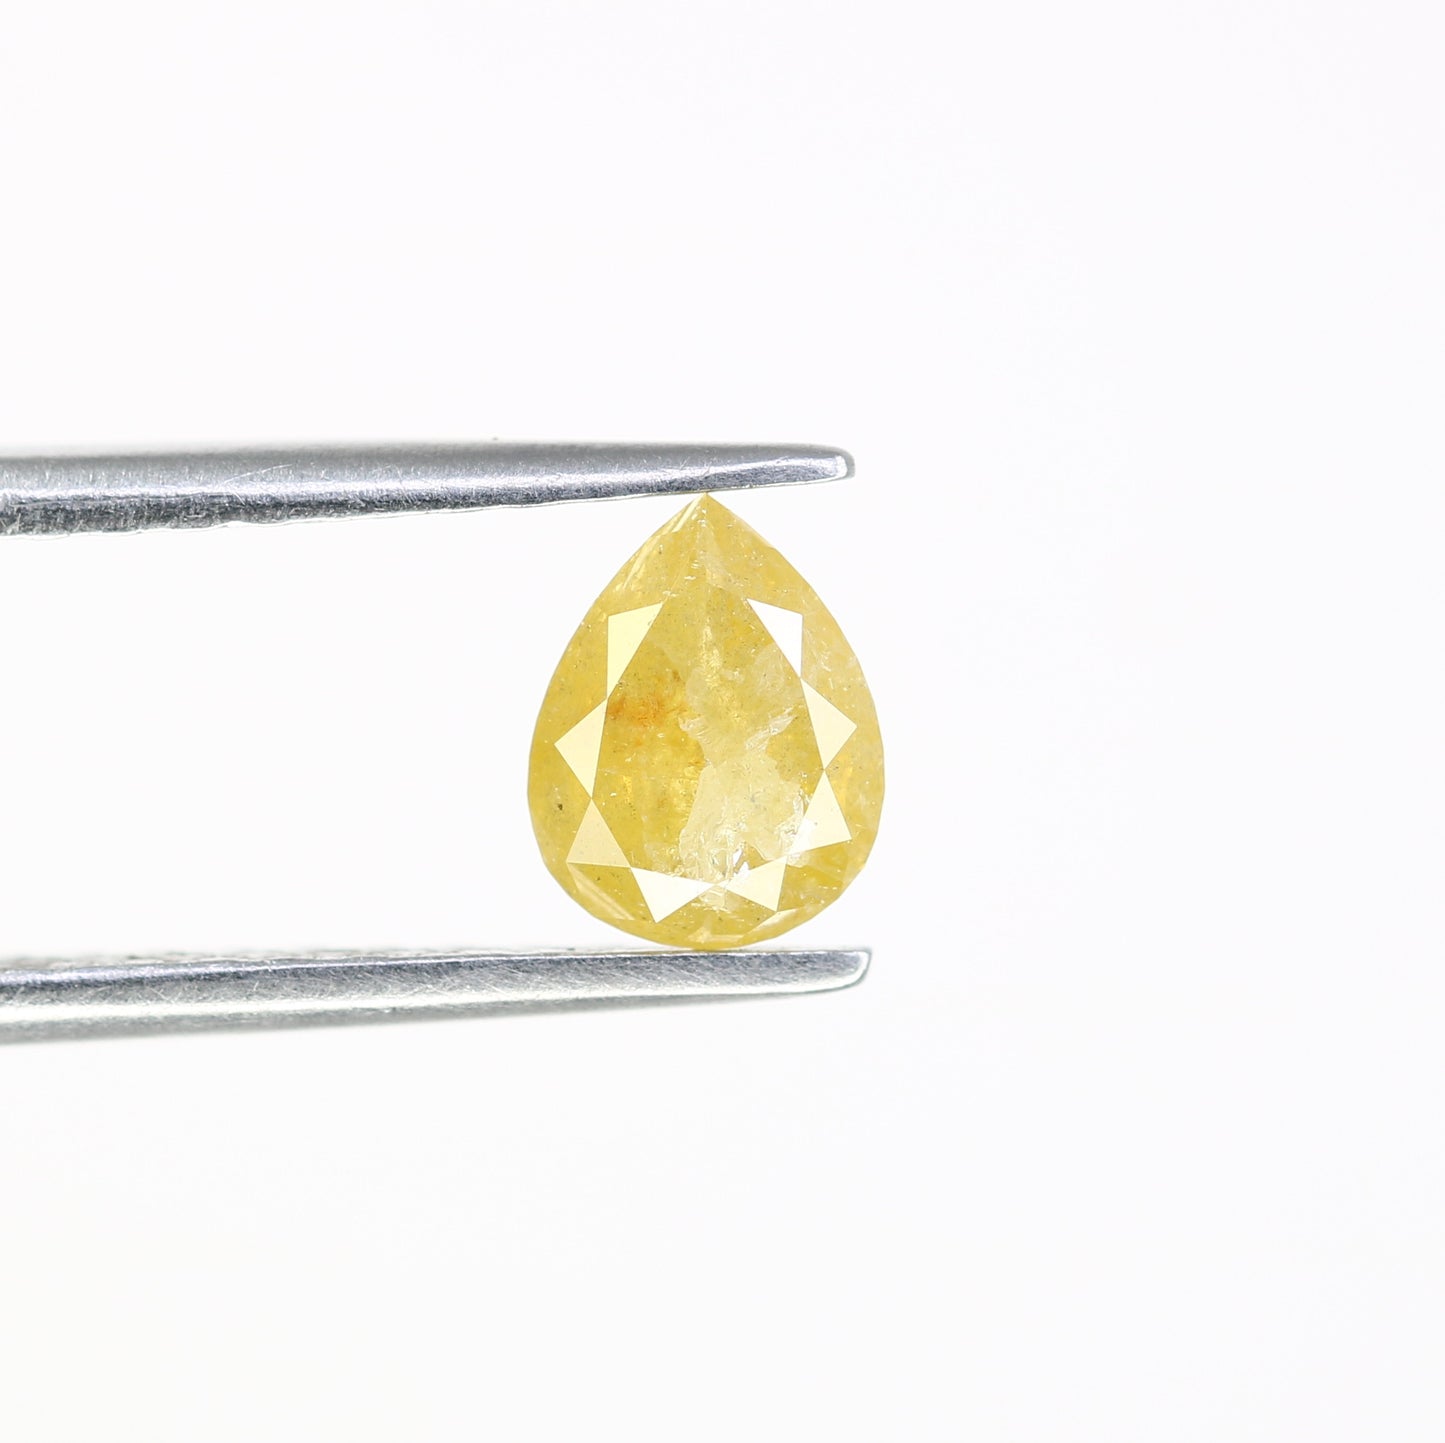 0.71 Natural Yellow Loose Pear Cut Diamond For Galaxy Ring